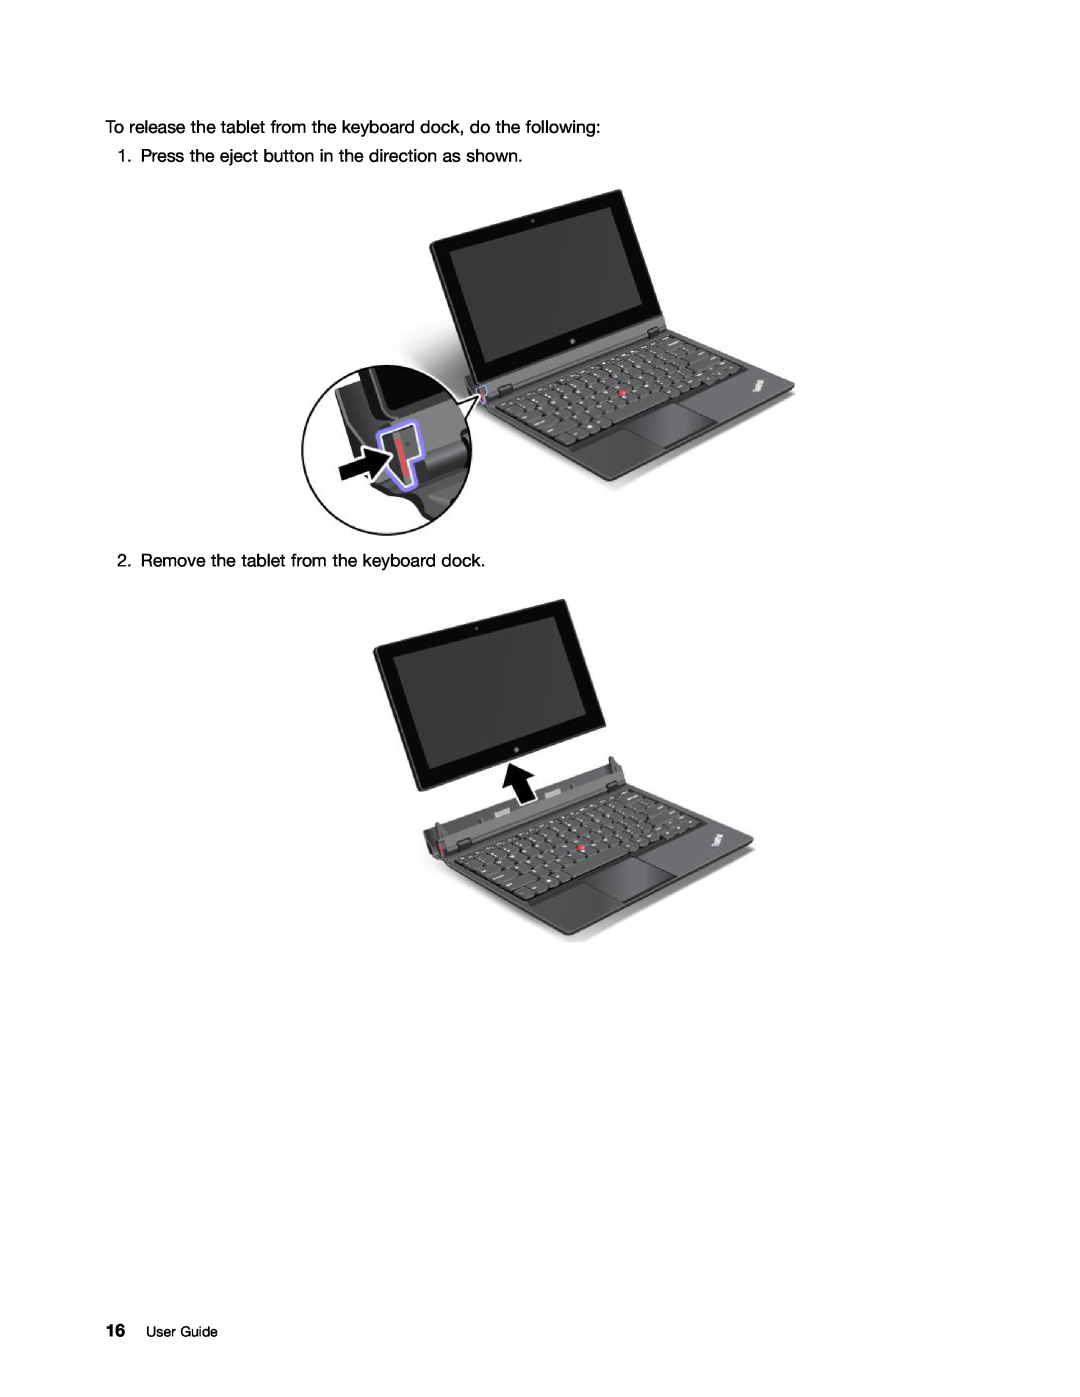 Lenovo 369724U, 36984UU, 36984RU, 36984MU, 36984QU, 370133U, 36984LU Remove the tablet from the keyboard dock, 16User Guide 